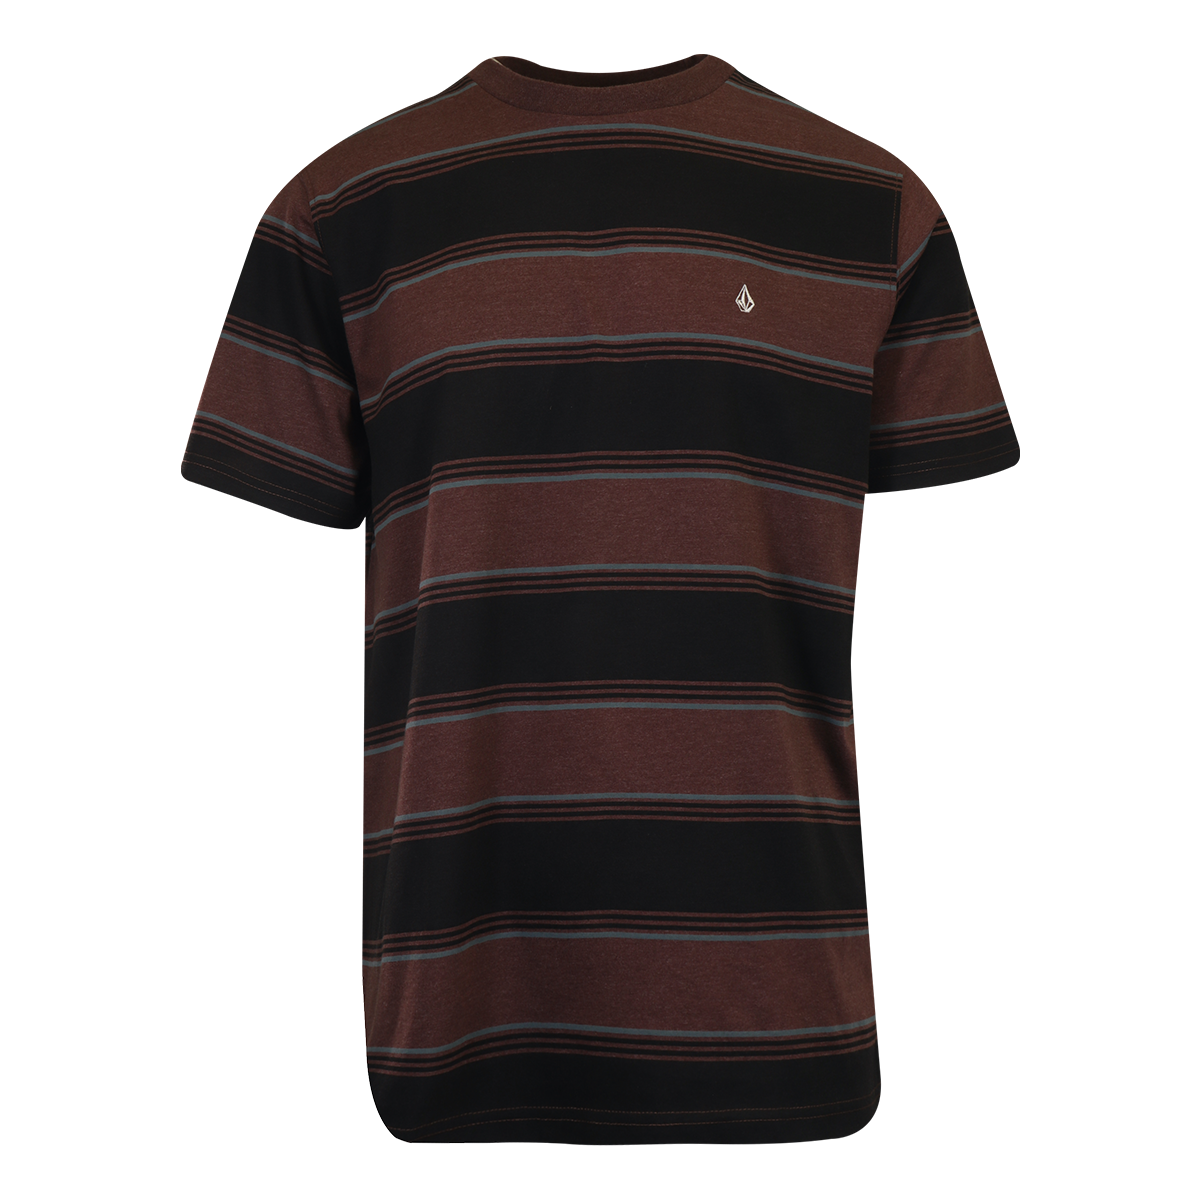 Volcom Men's T-Shirt Black Maroon Striped S/S Tee (S41)